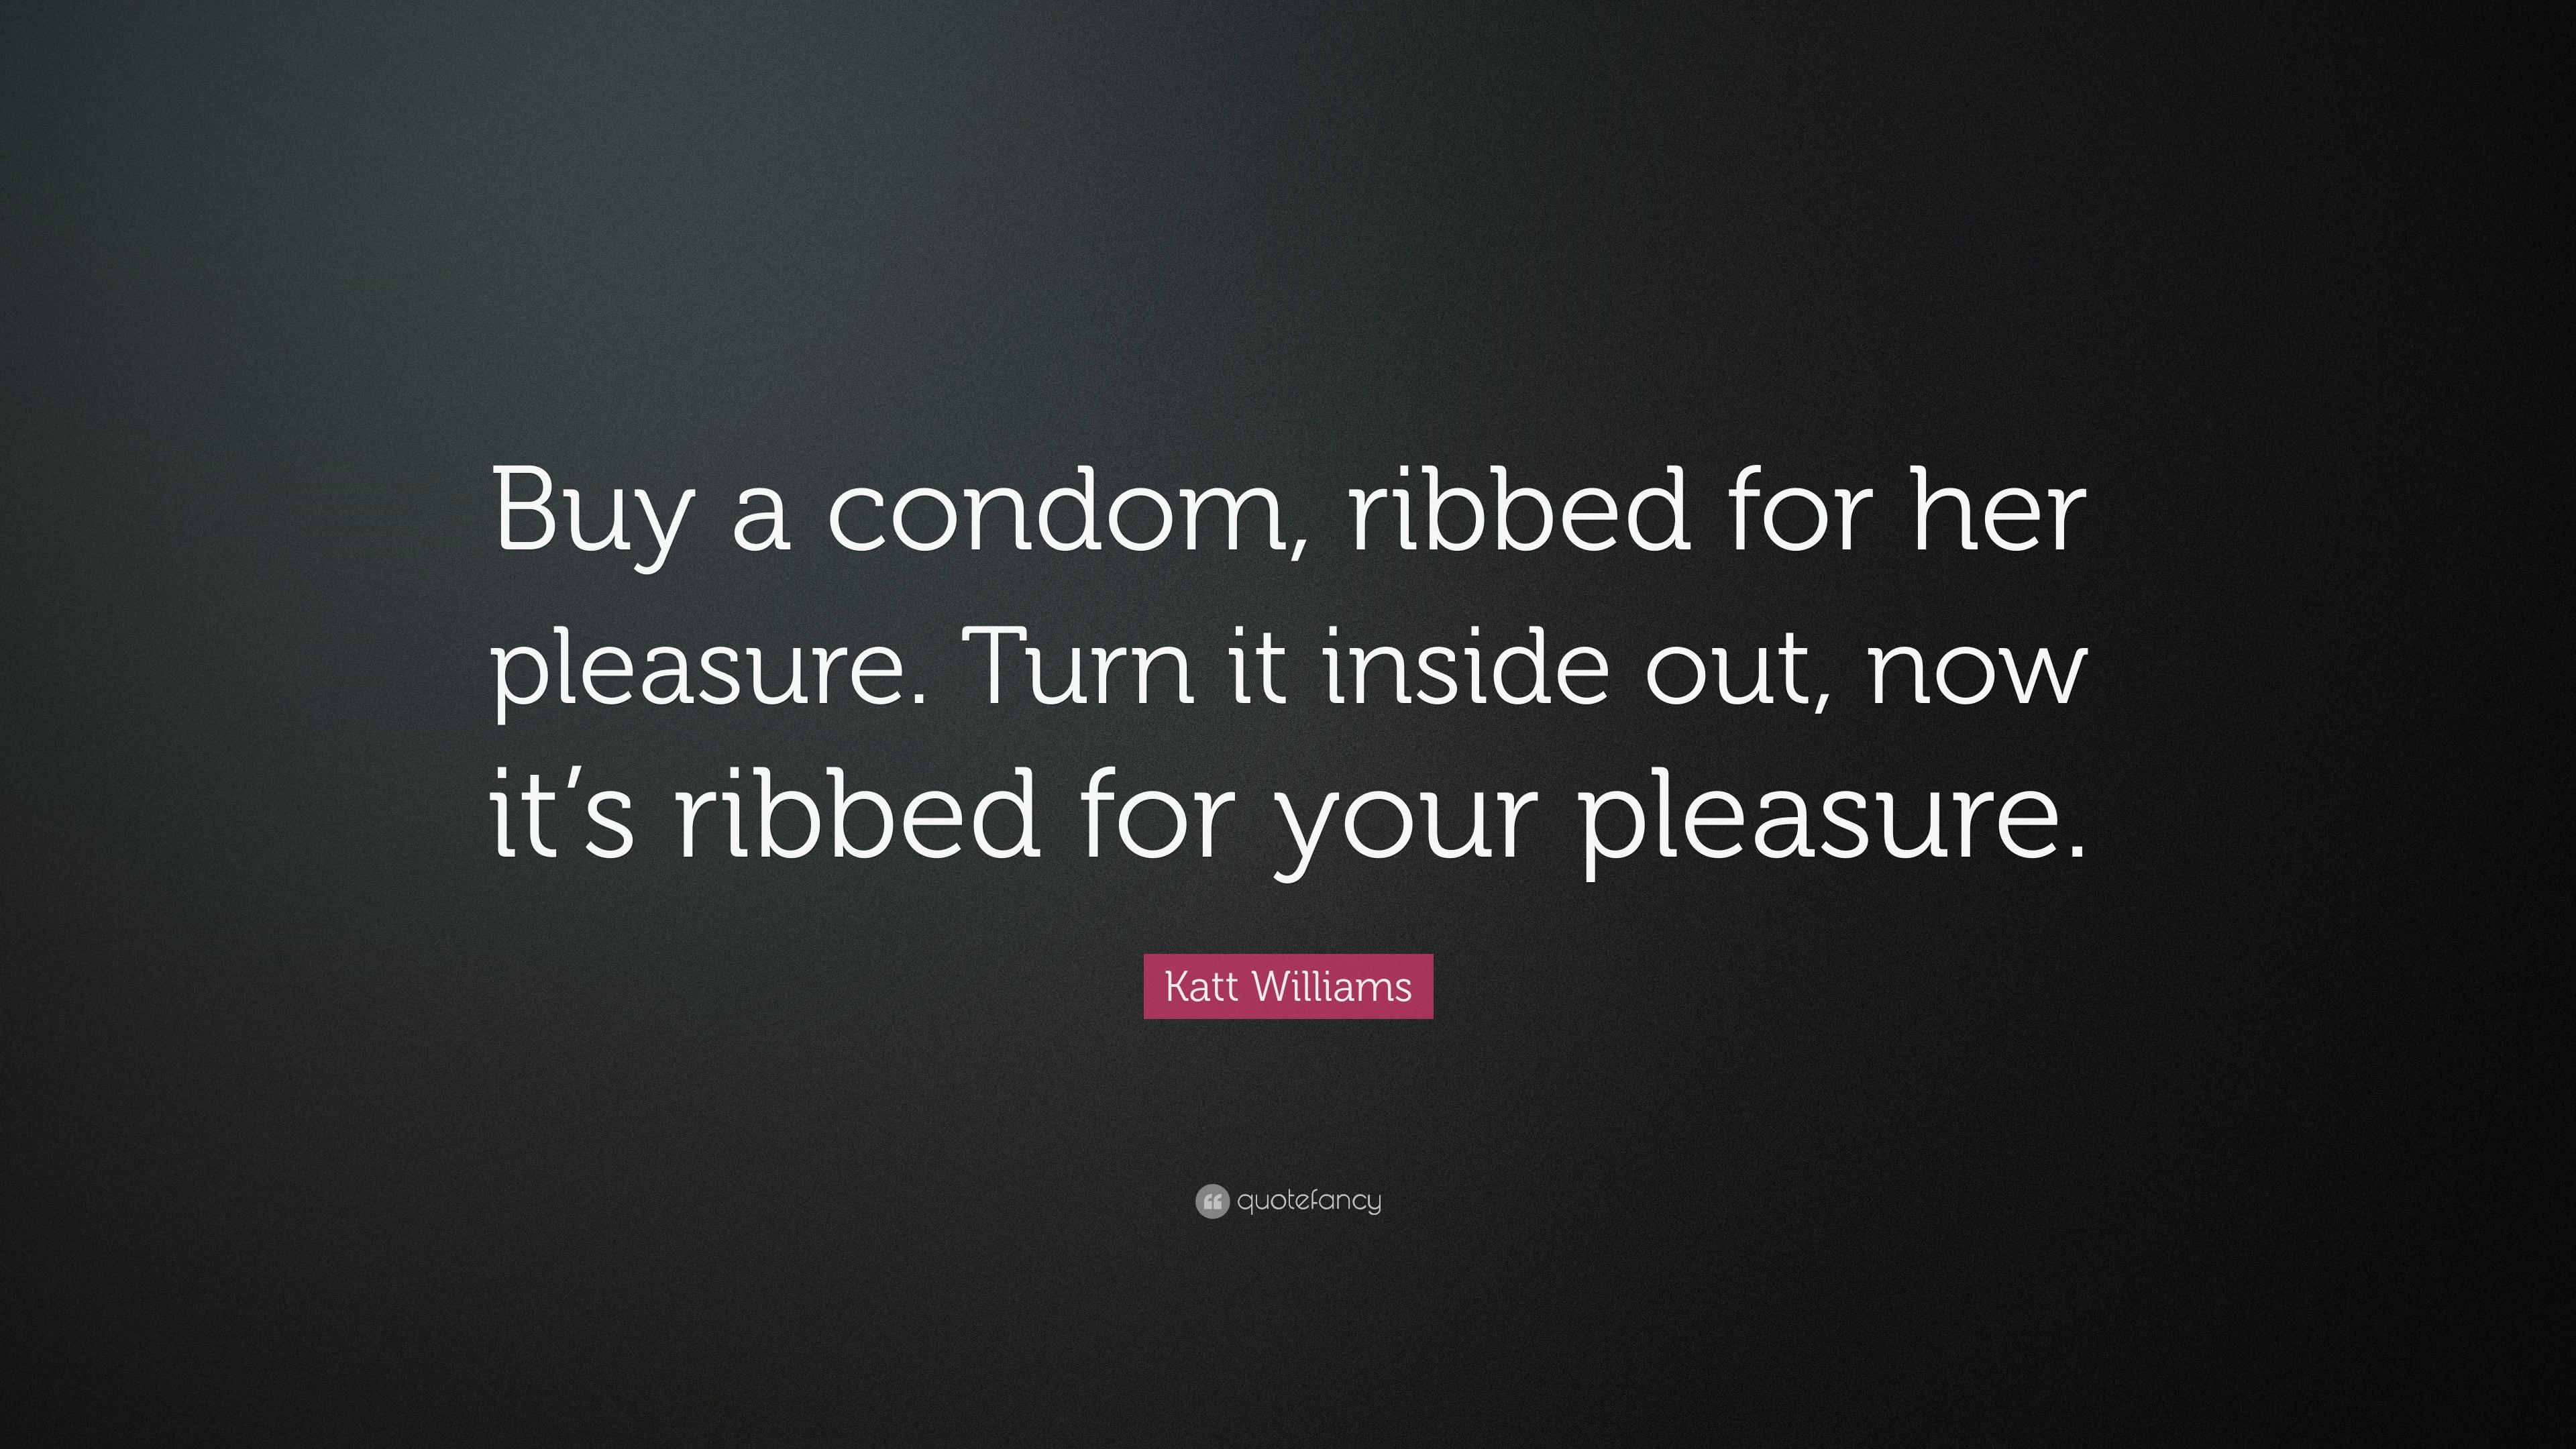 Katt Williams Quote: “Buy a condom, ribbed for her pleasure. Turn it